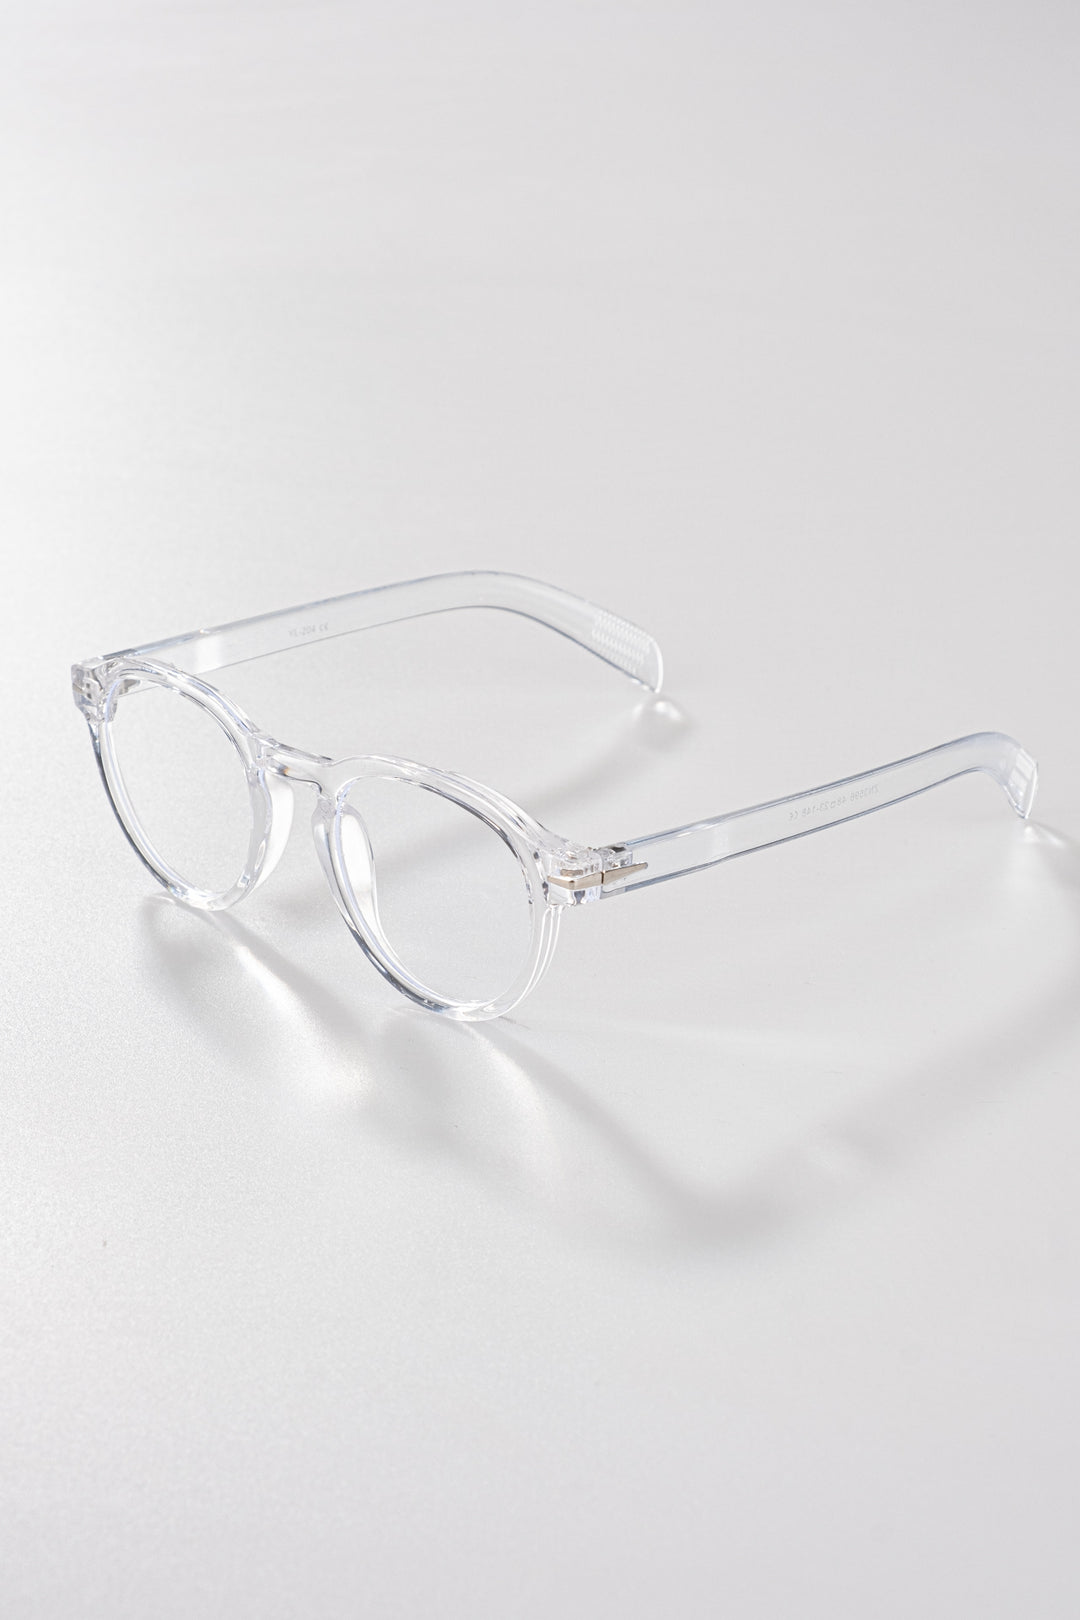 Roseua Blue Light Protection Glasses